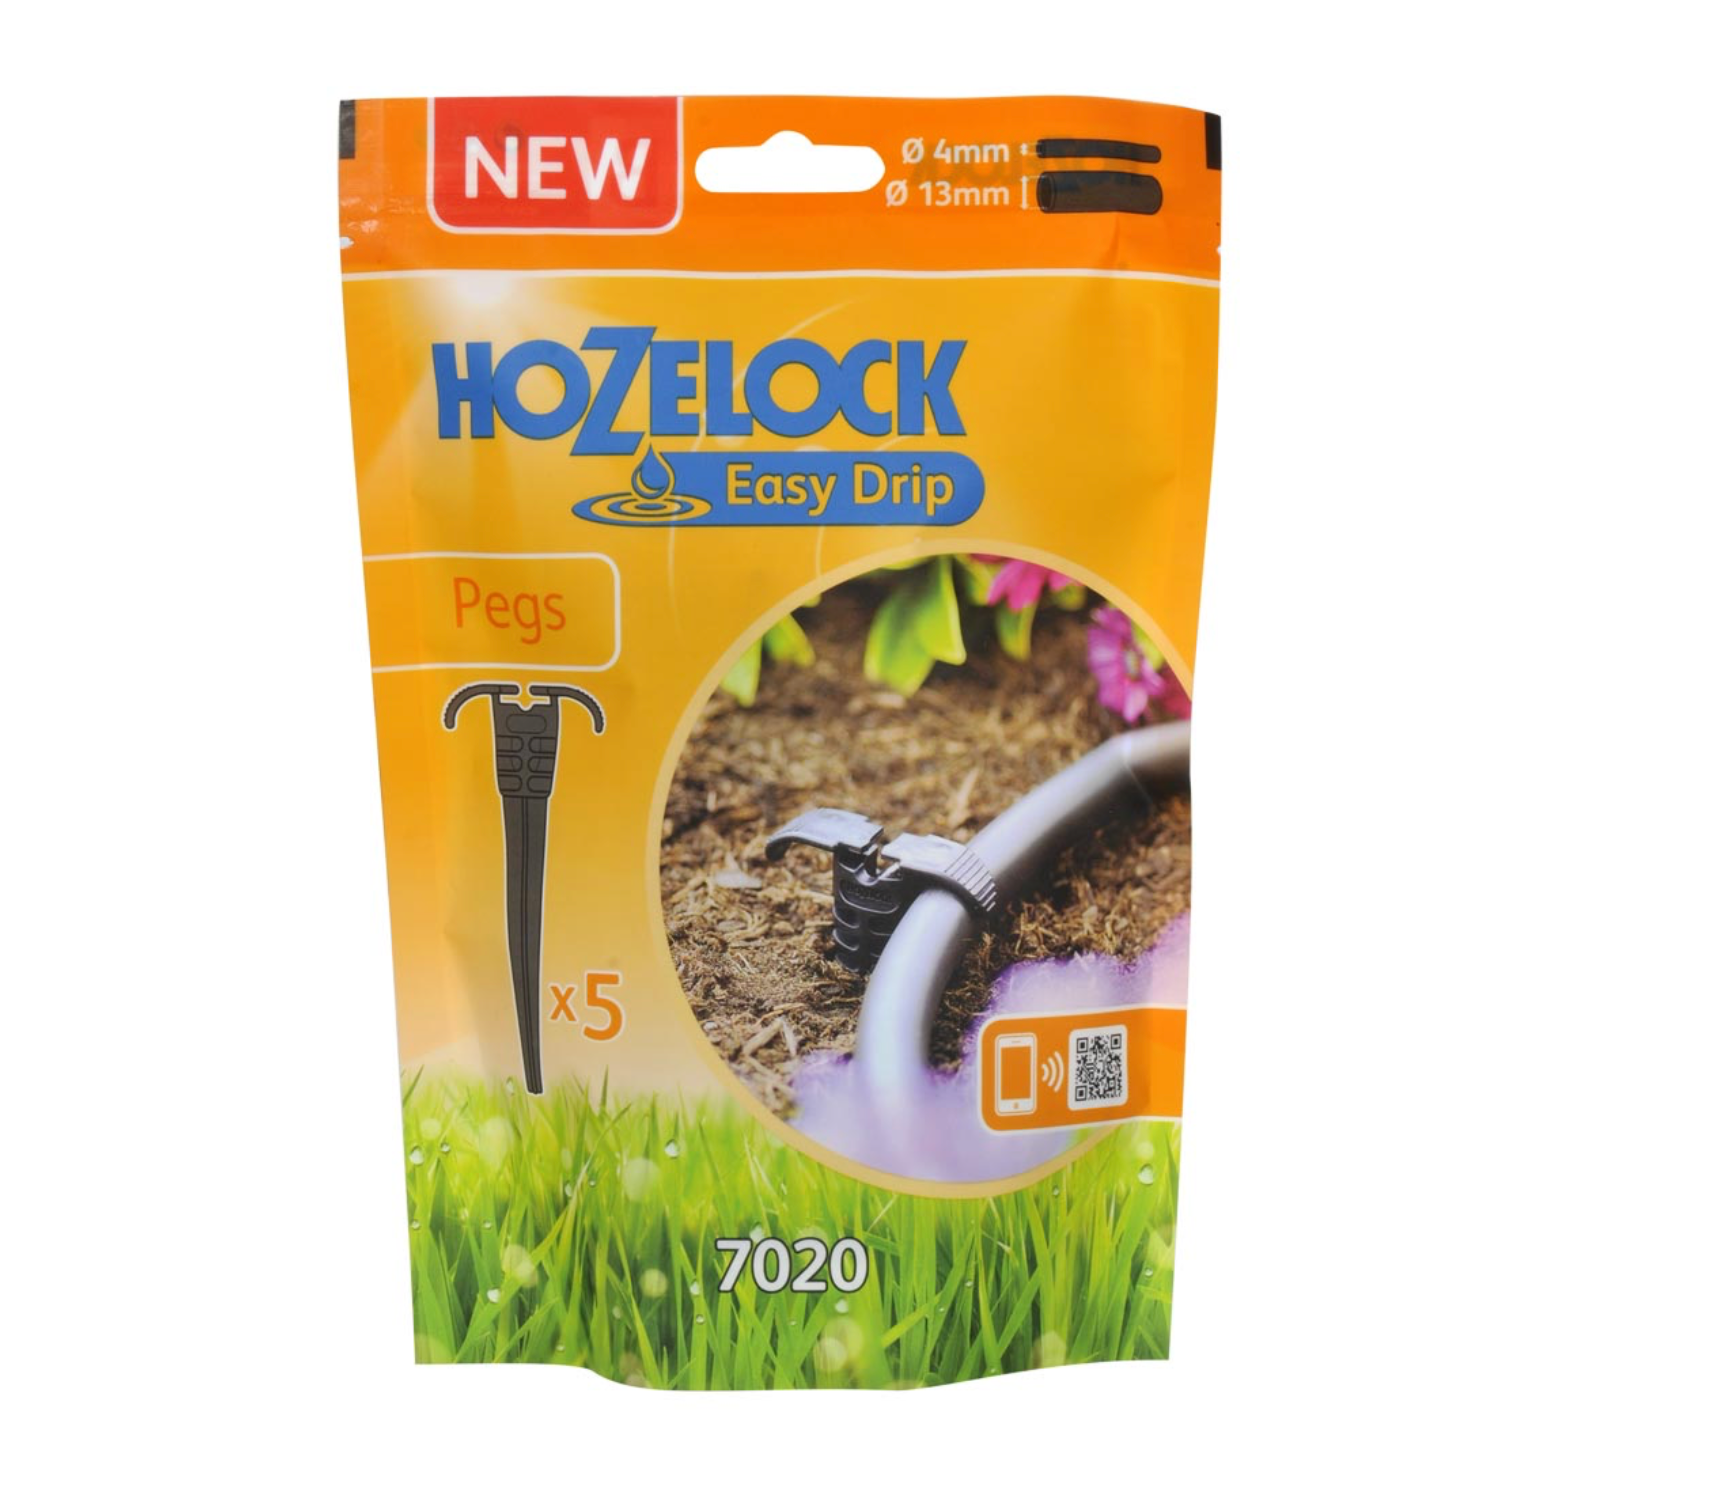 Hozelock 7020 Easy Drip Pegs Pack of 5